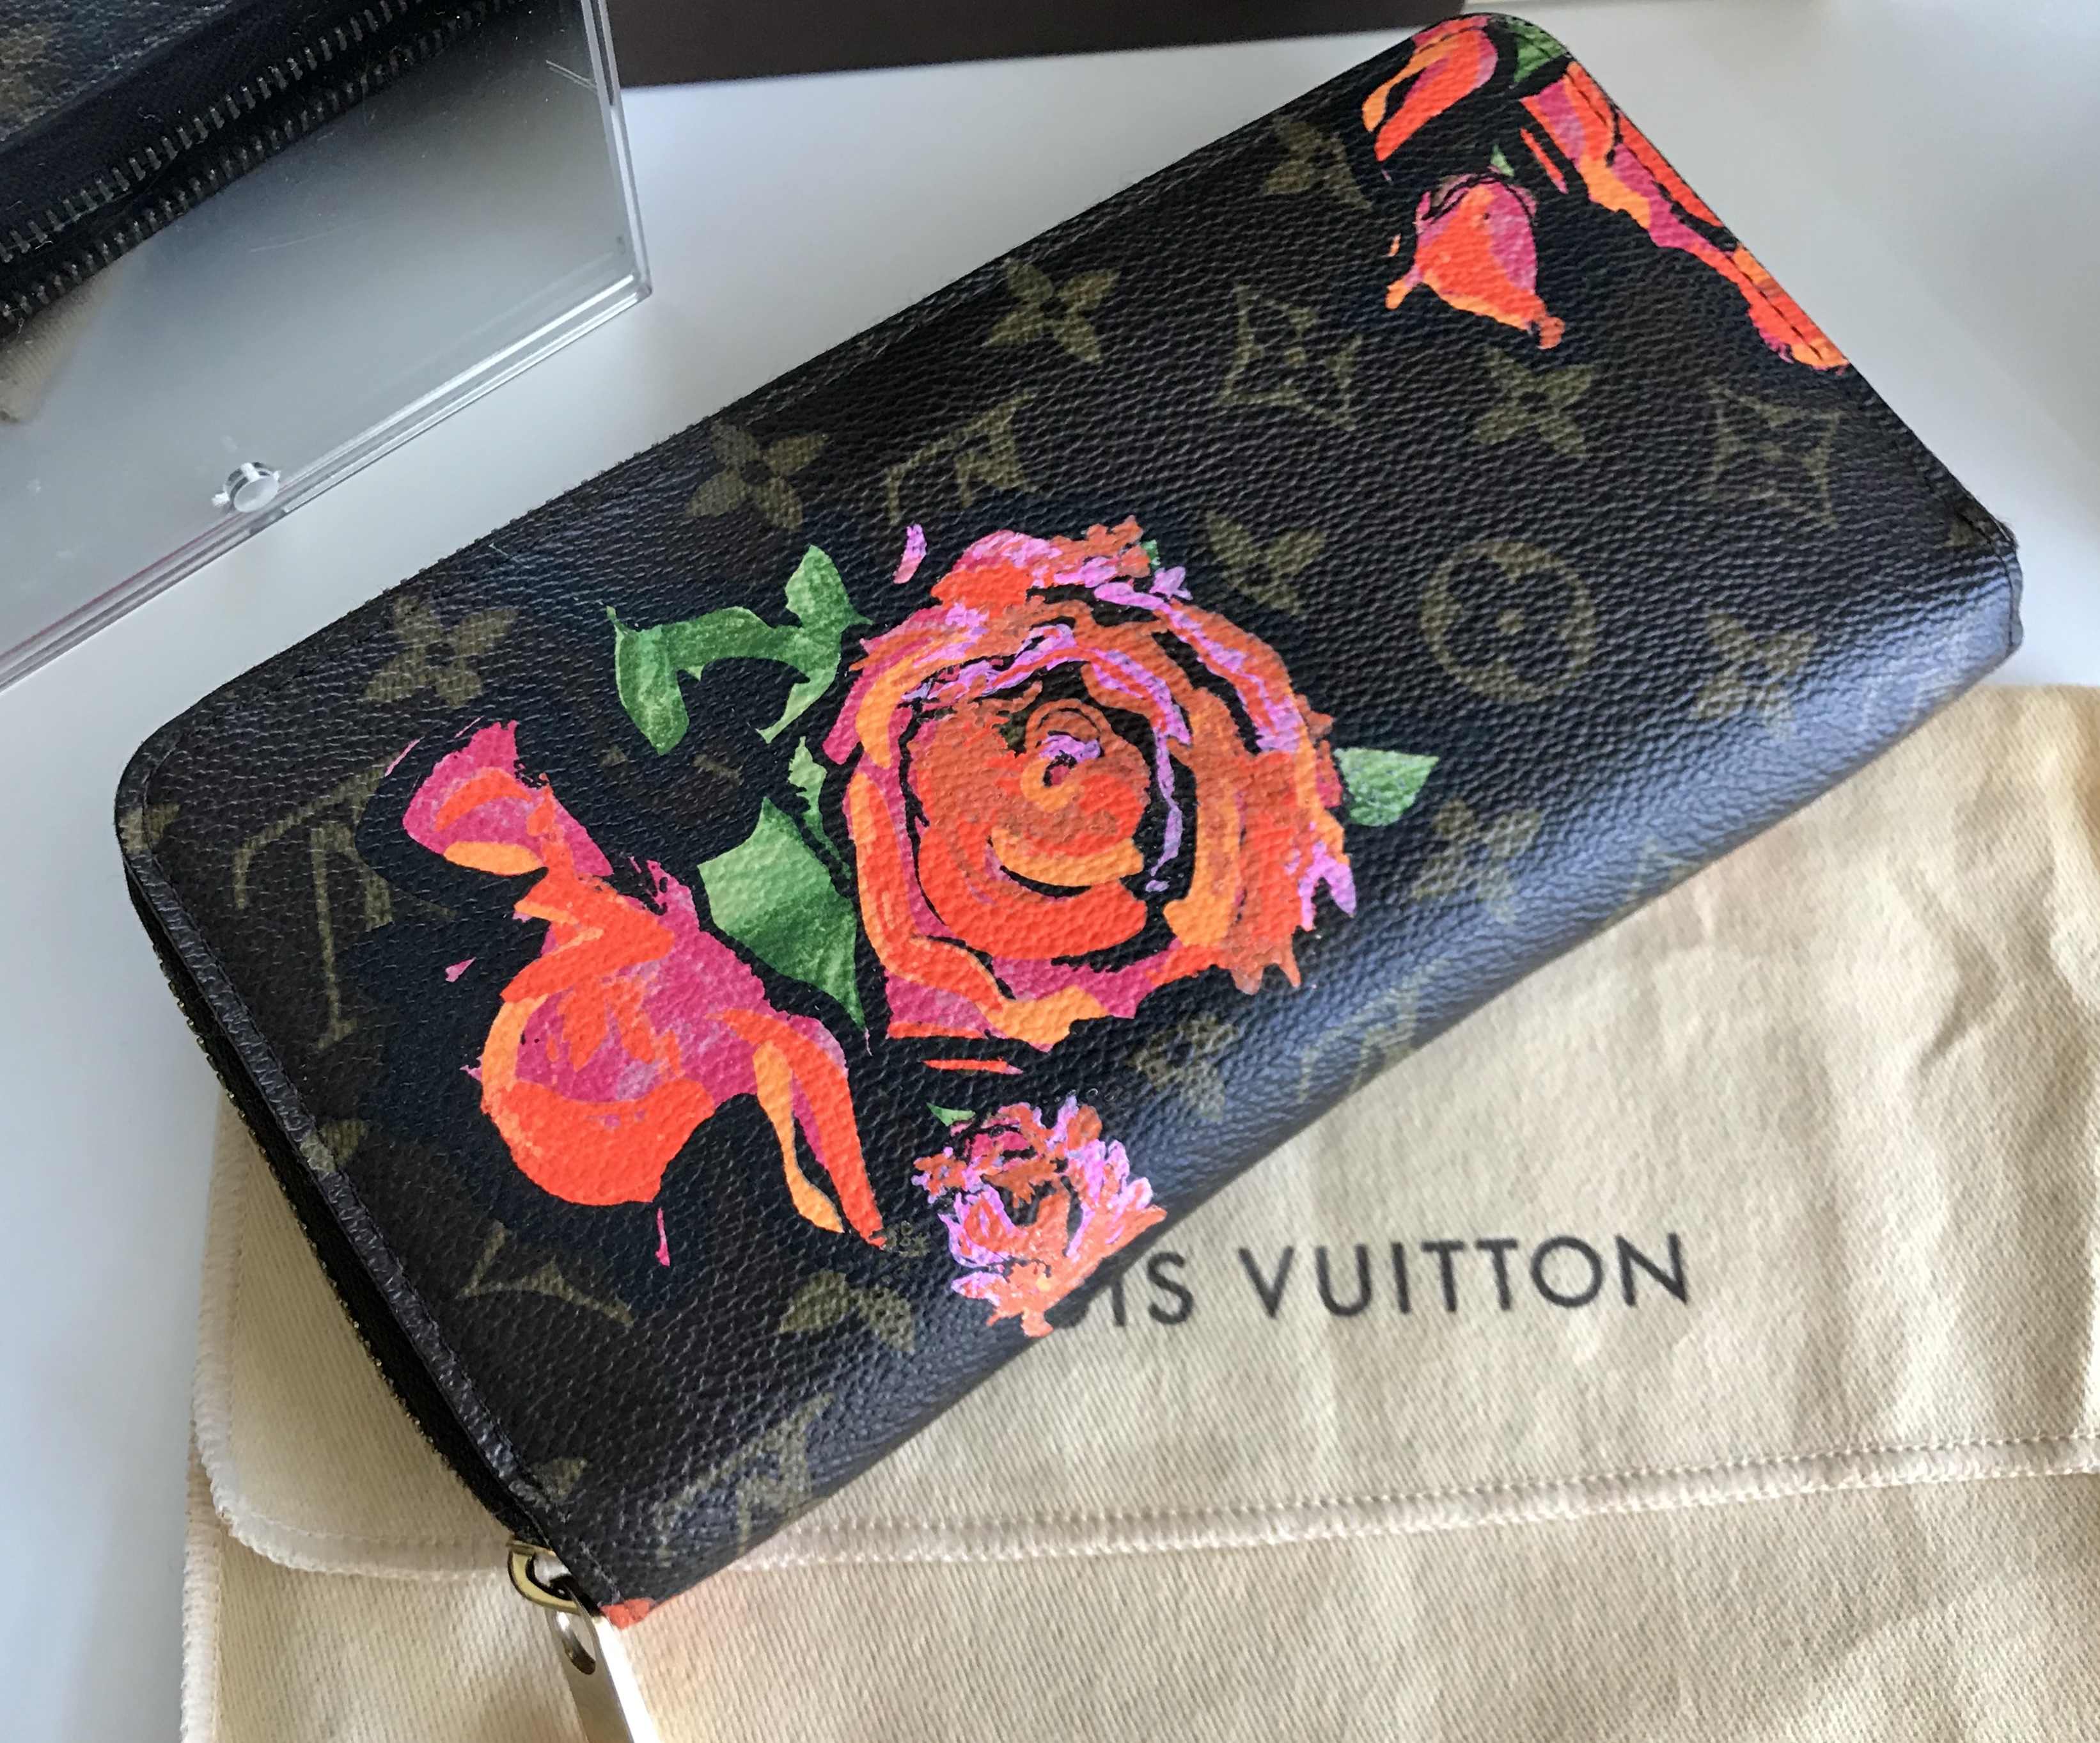 Louis Vuitton Monogram Stephen Sprouse Roses Zippy Wallet